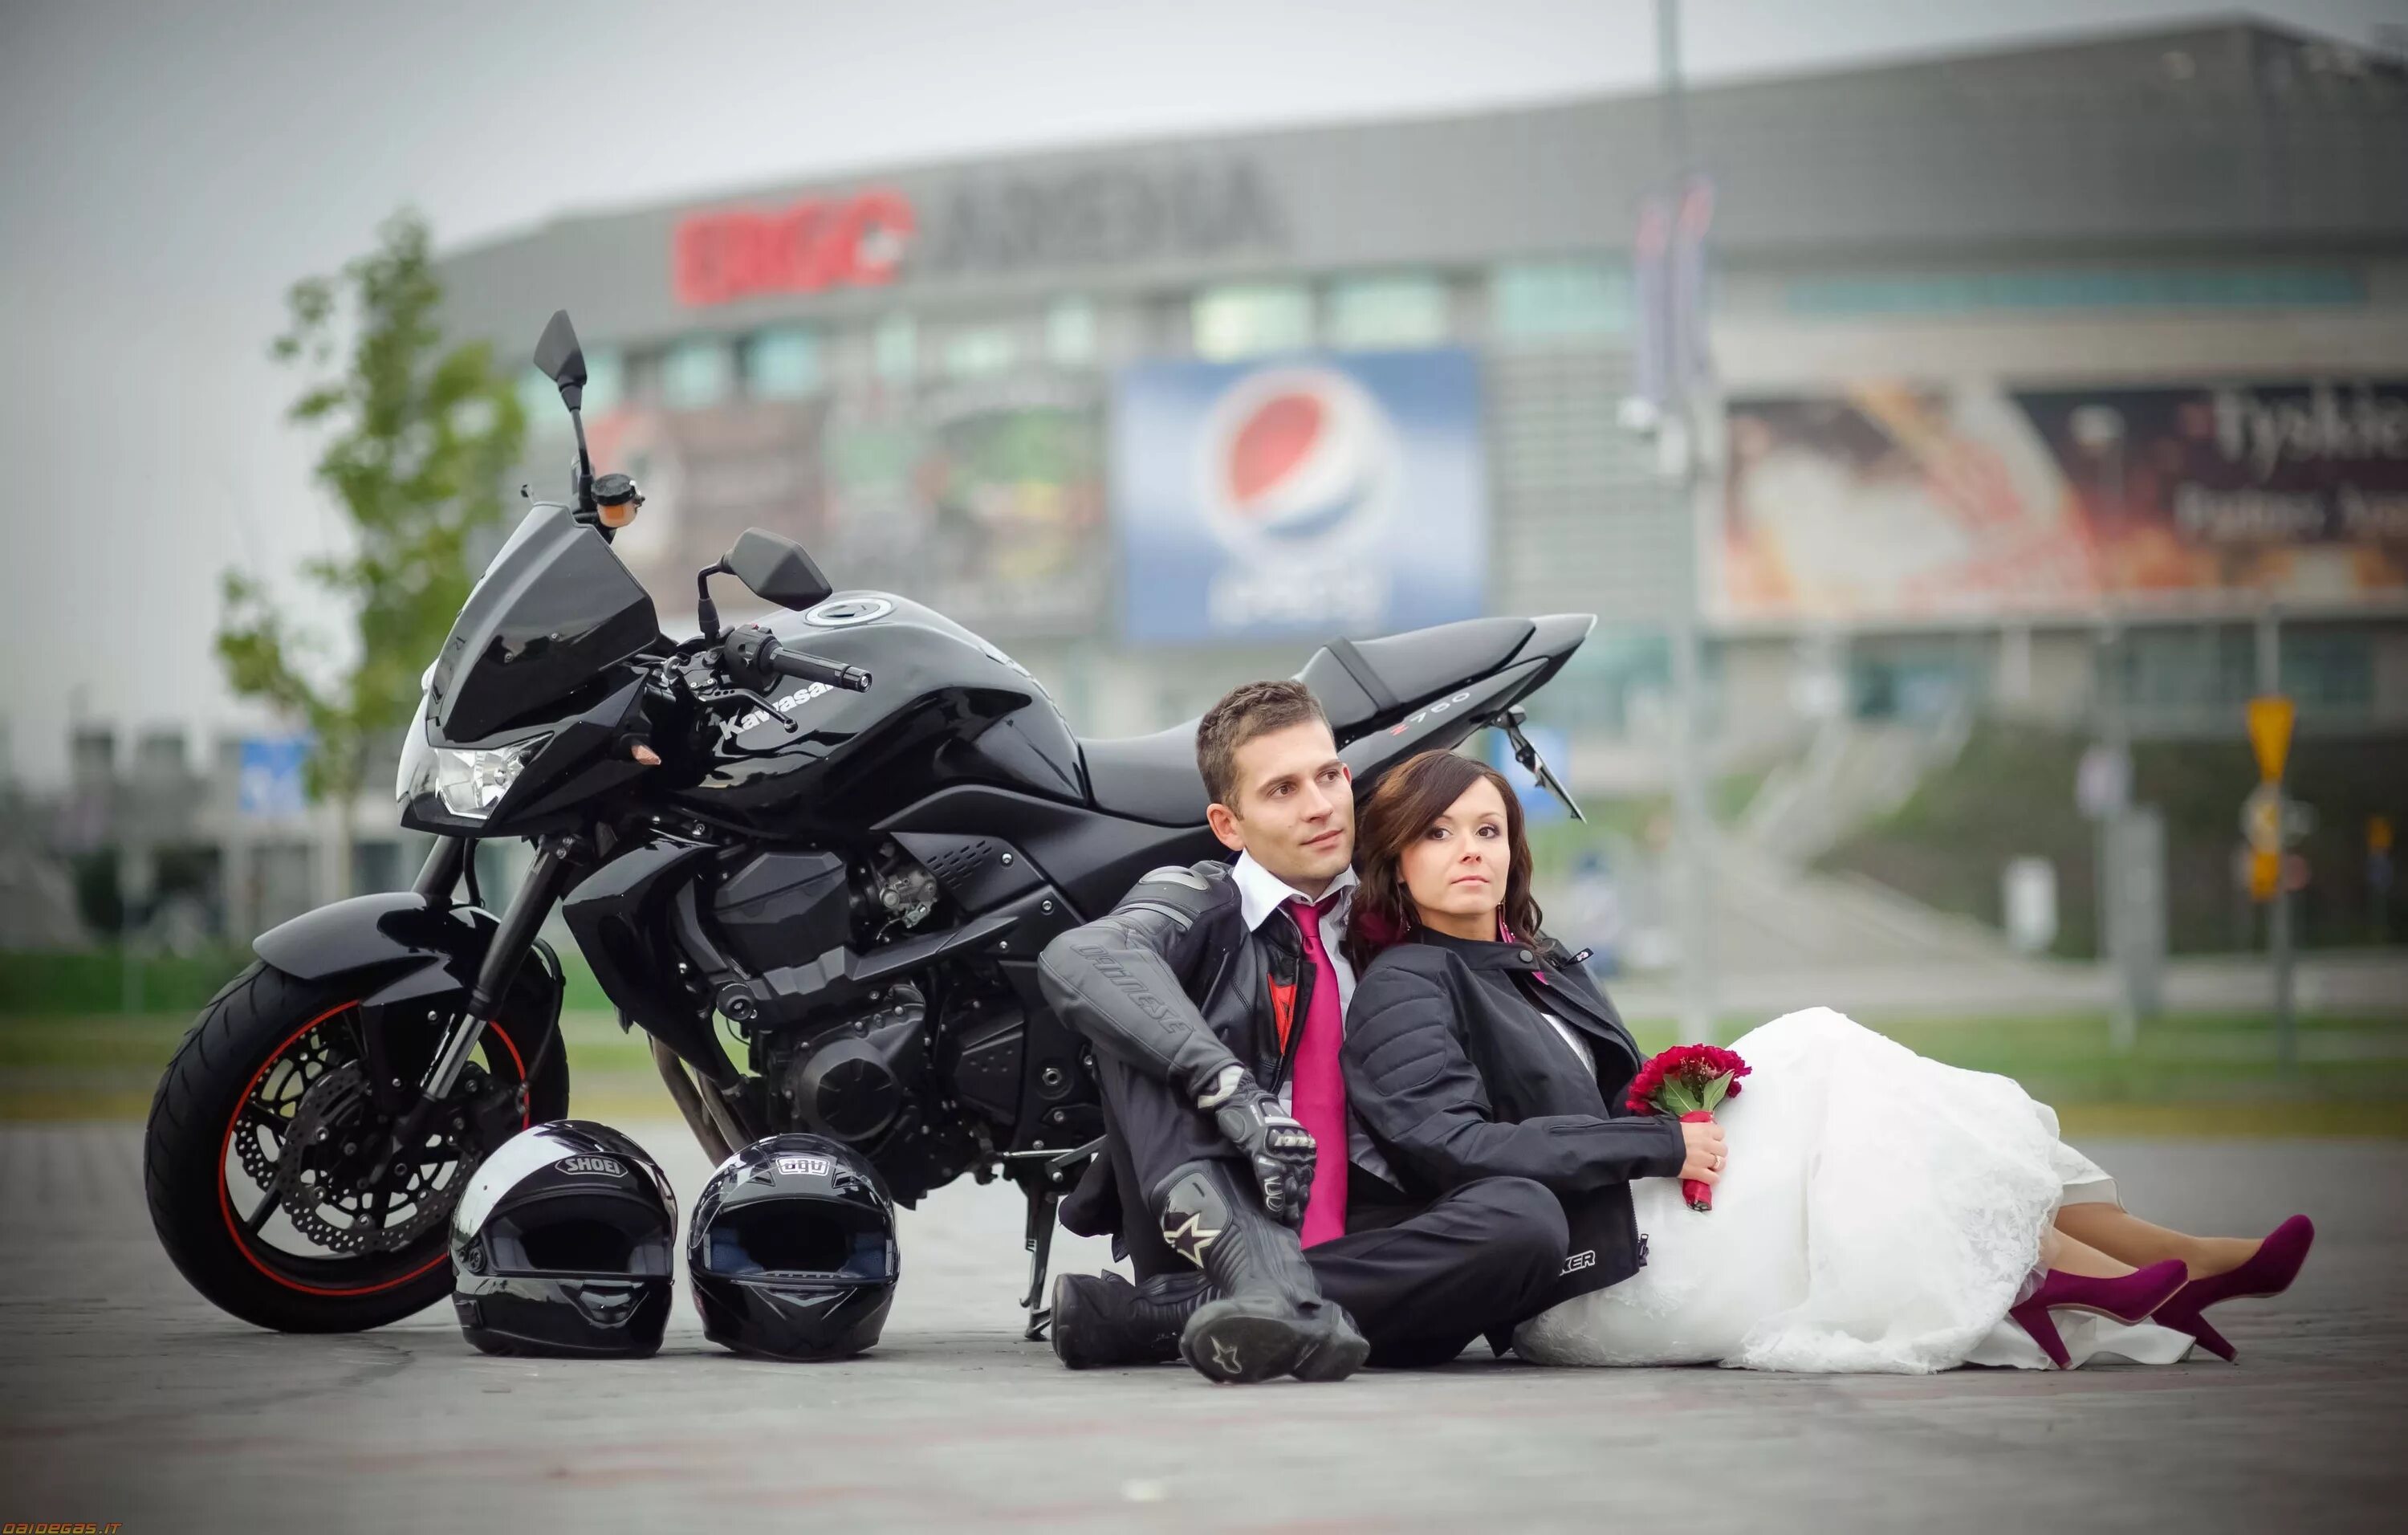 Жена байкера. Пара на мотоцикле. Свадебный мотоцикл. Свадьба на мотоциклах. Фотосессия на мотоцикле.